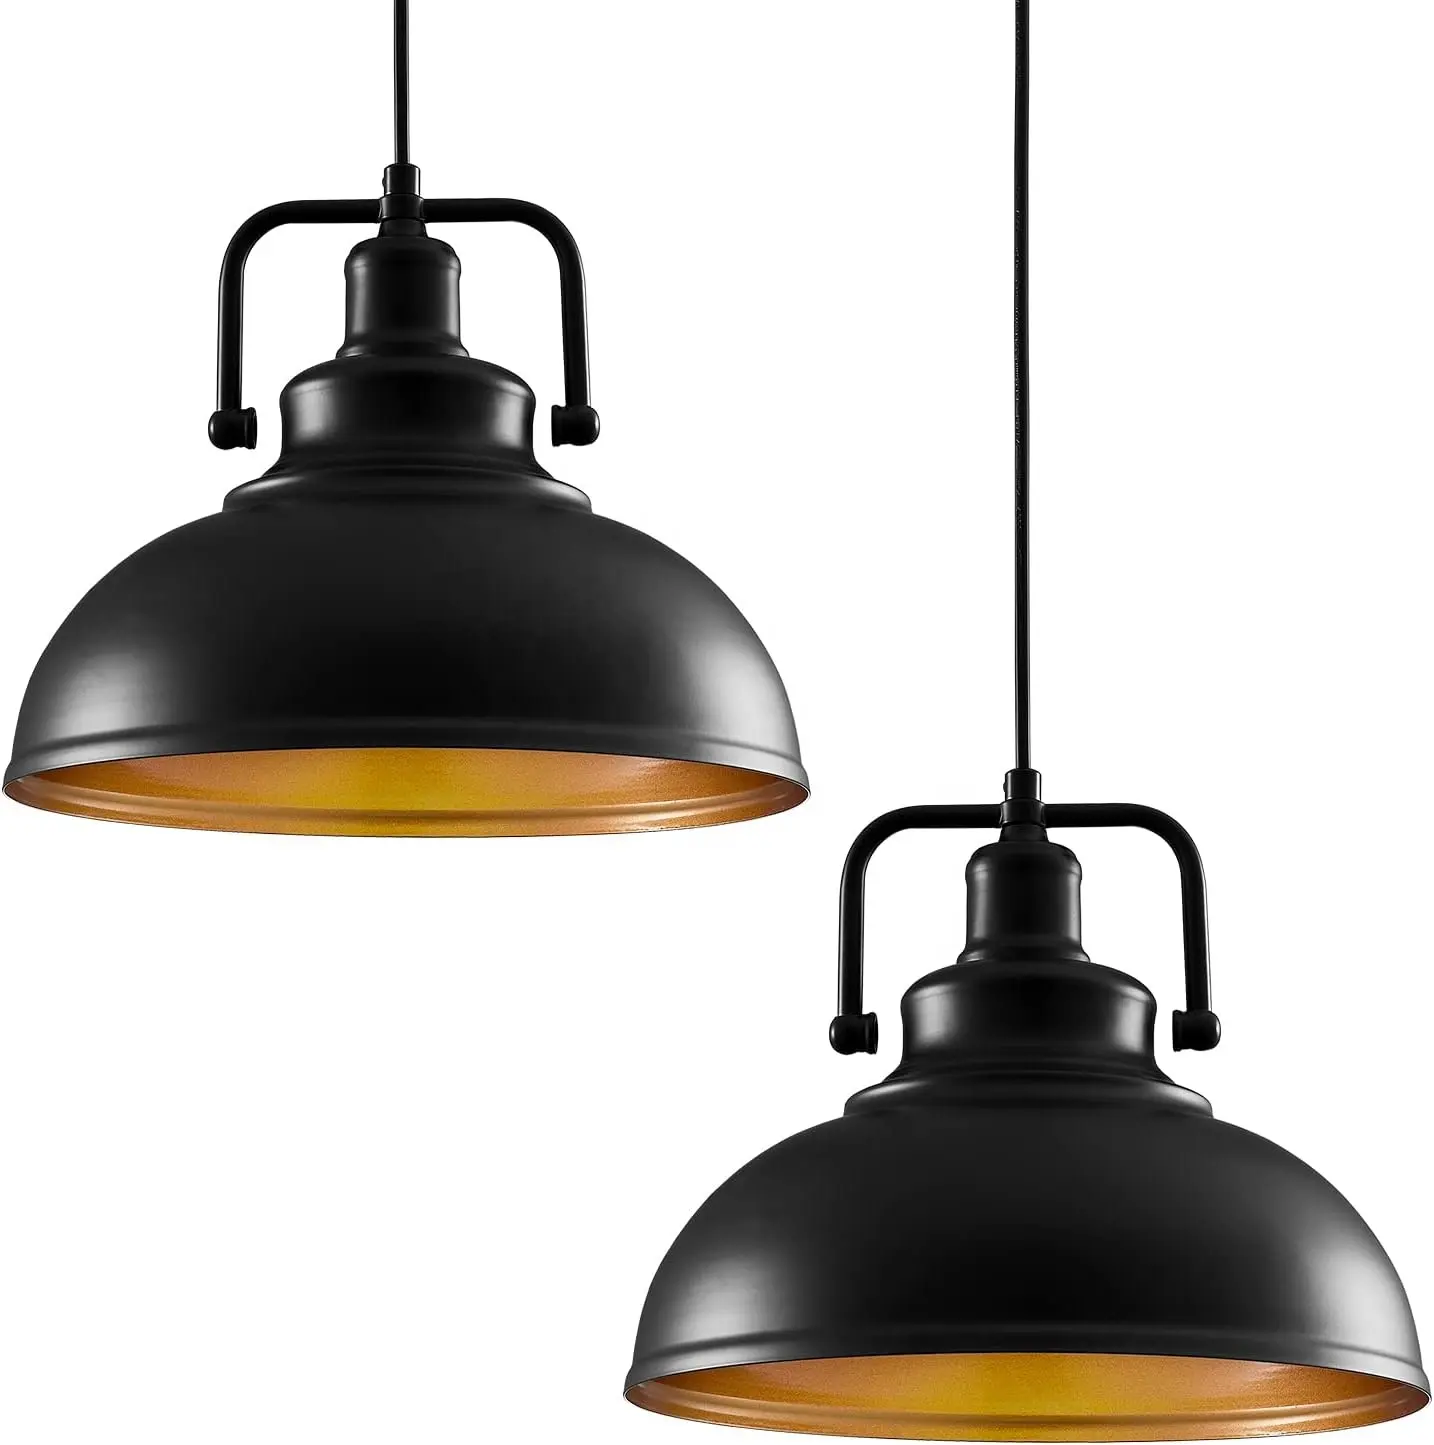 Retro pot lid black hanging ceiling lights, farmhouse lighting kitchen island hanging lights